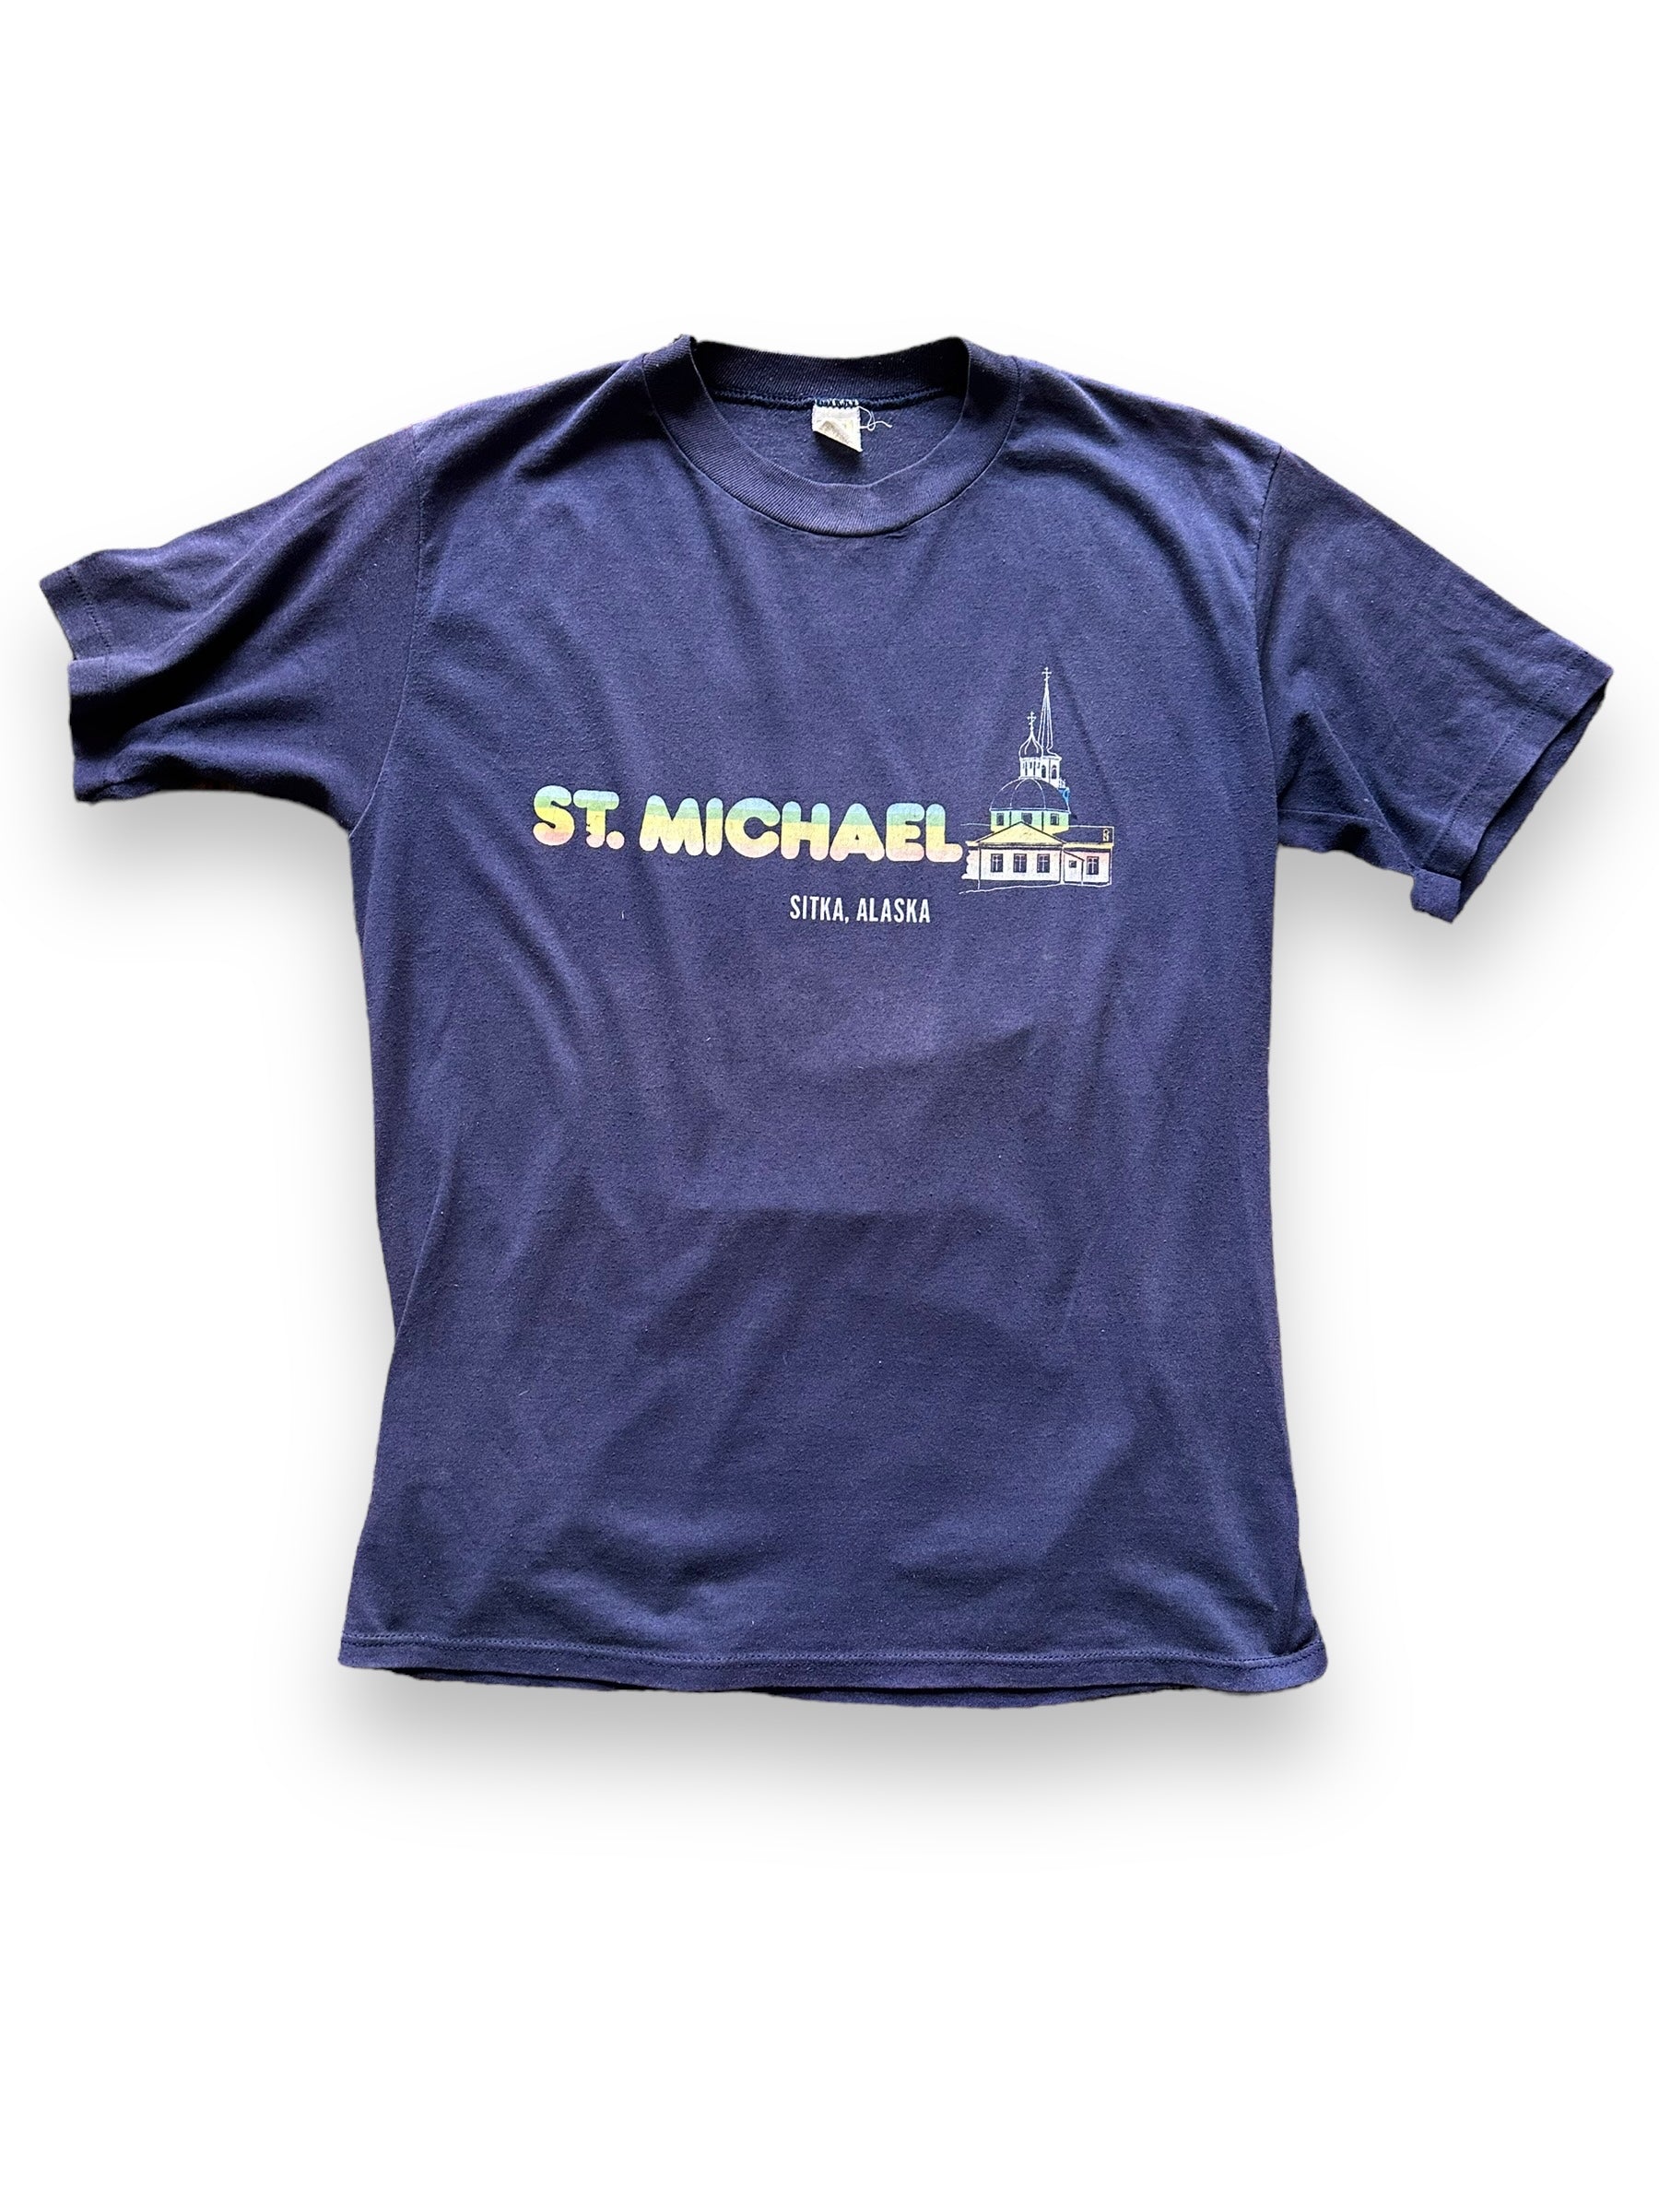 Front View of Vintage St. Michael's Sitka Alaska Tee SZ M | Vintage Alaska T-Shirts Seattle | Barn Owl Vintage Clothing Seattle